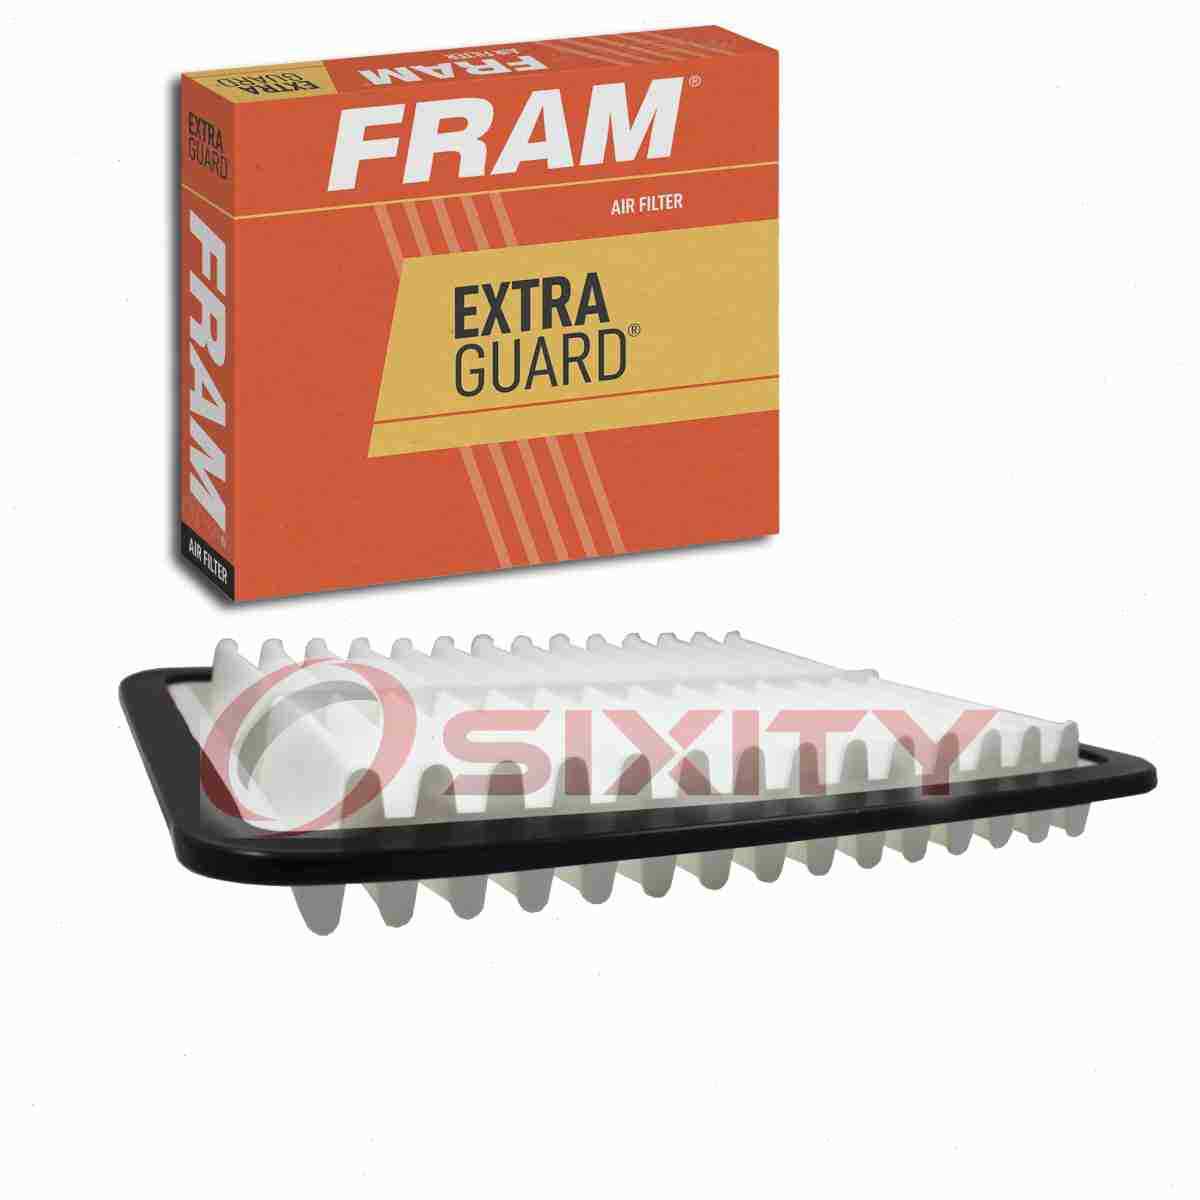 FRAM Extra Guard Air Filter for 2007-2010 Pontiac G6 Intake Inlet Manifold rn